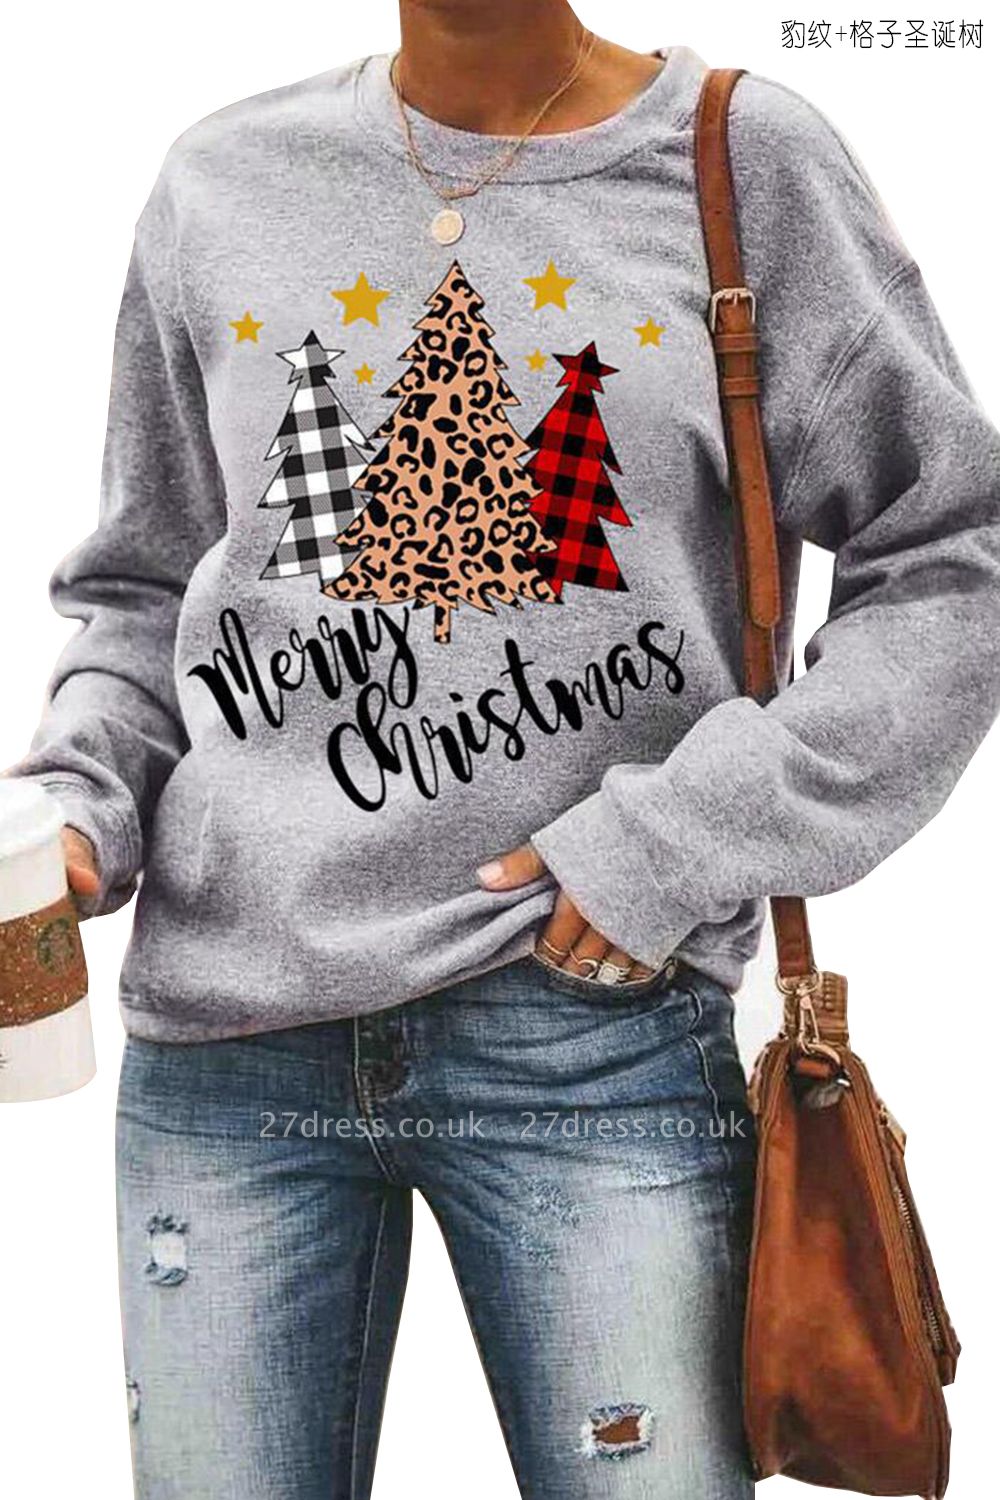 Leopard Printed Plaid Trees Christmas Sweatshirt Long Sleeve Lightweight Pullover Tops Blouse Women